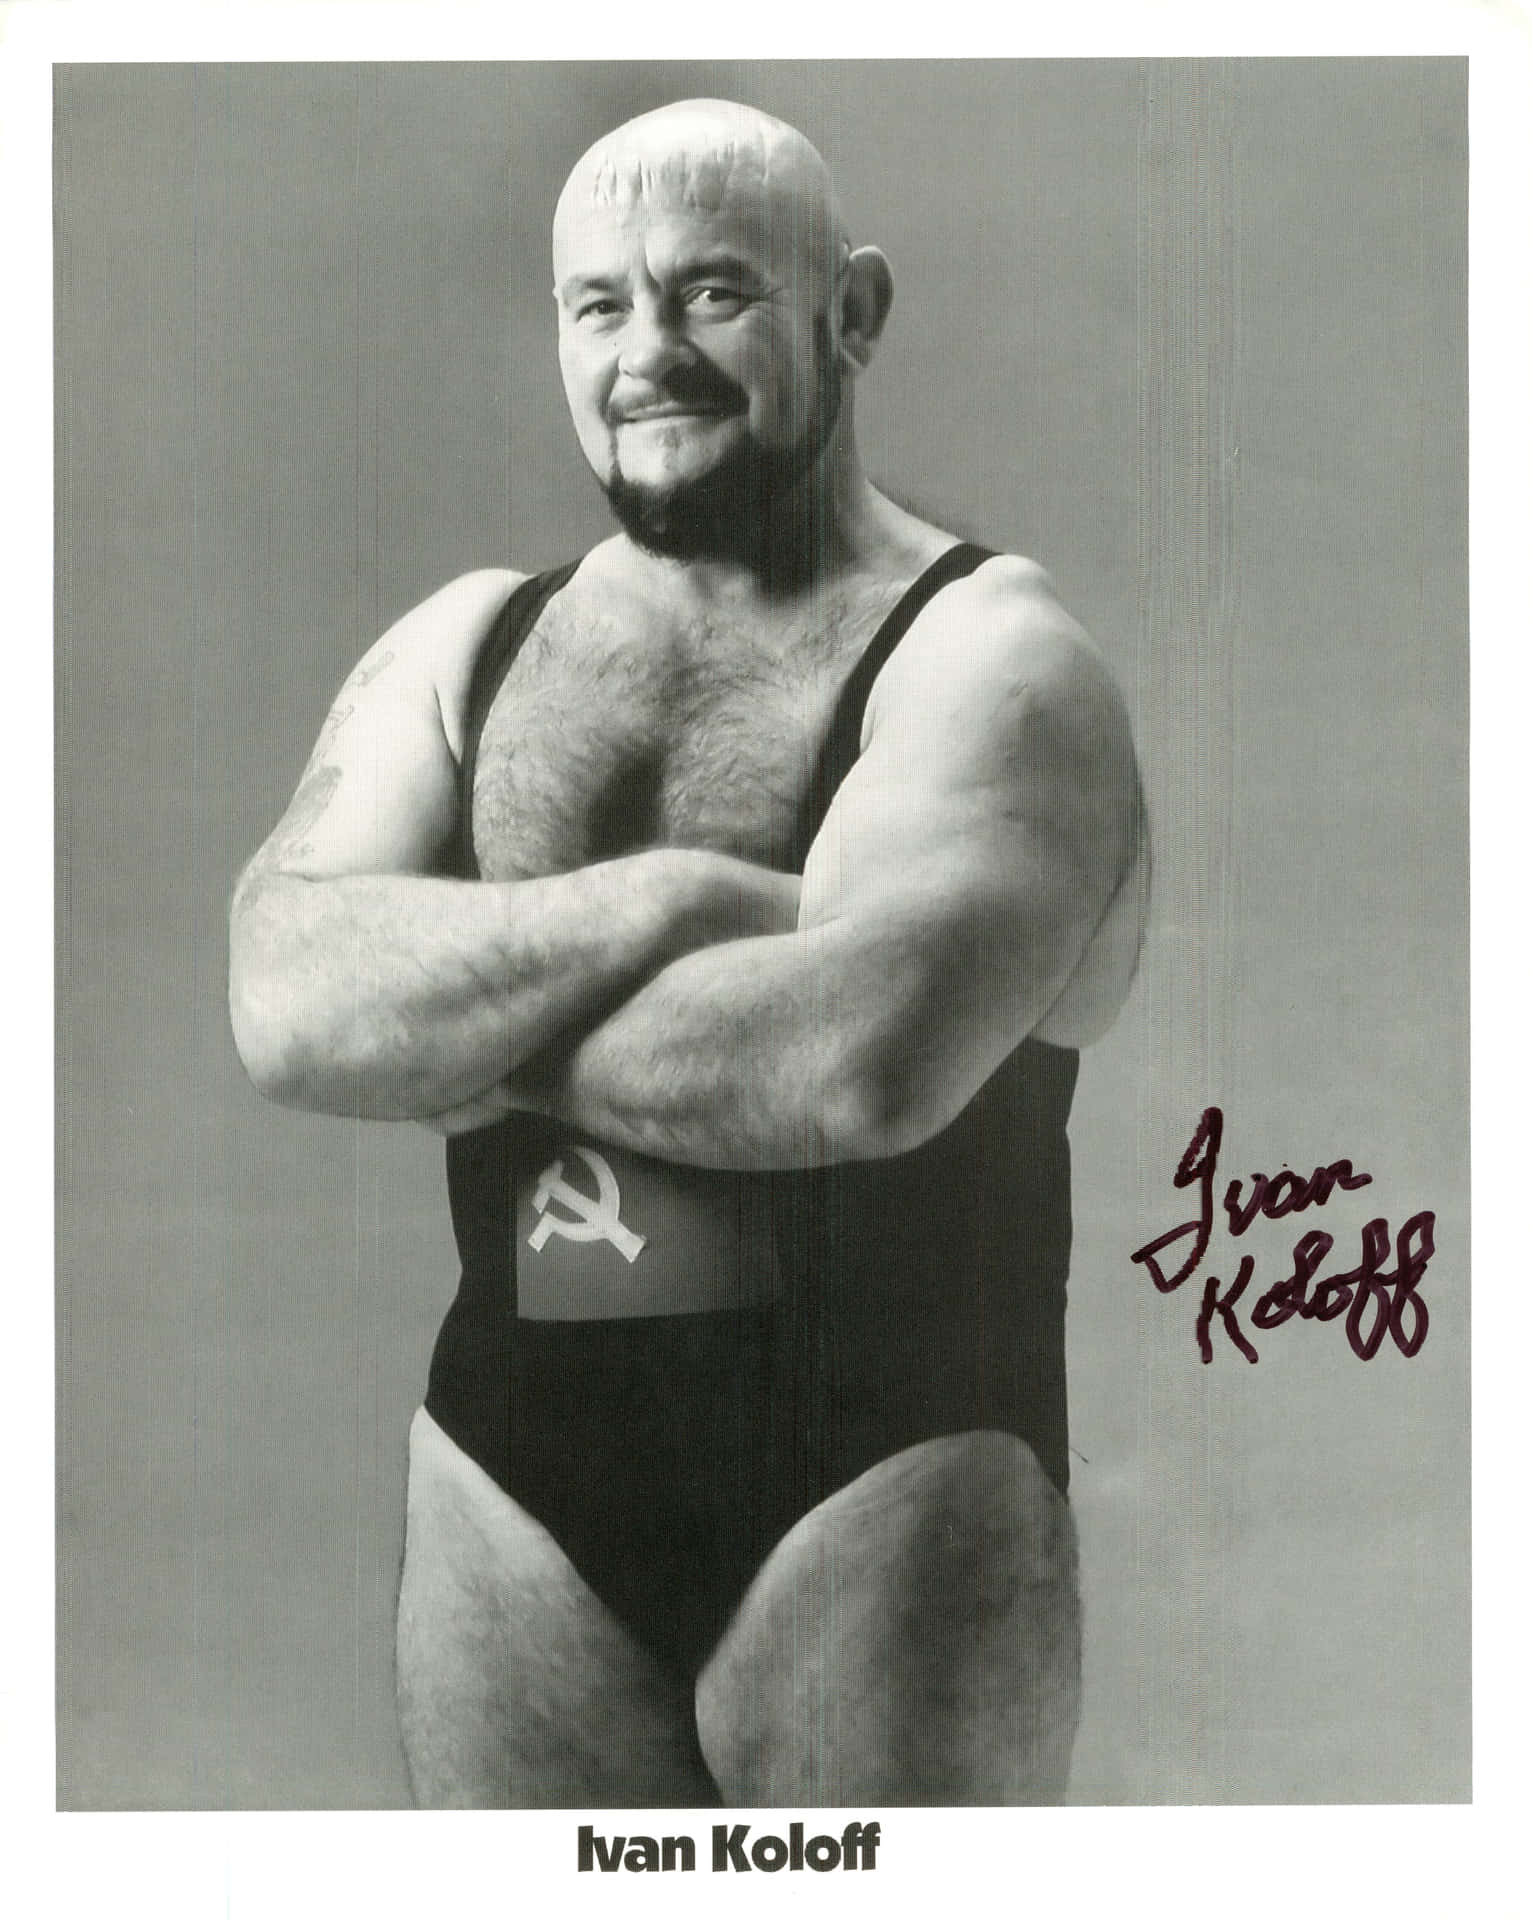 Canadian Wrestler Ivan Koloff Grayscale Autographed Portrait Wallpaper